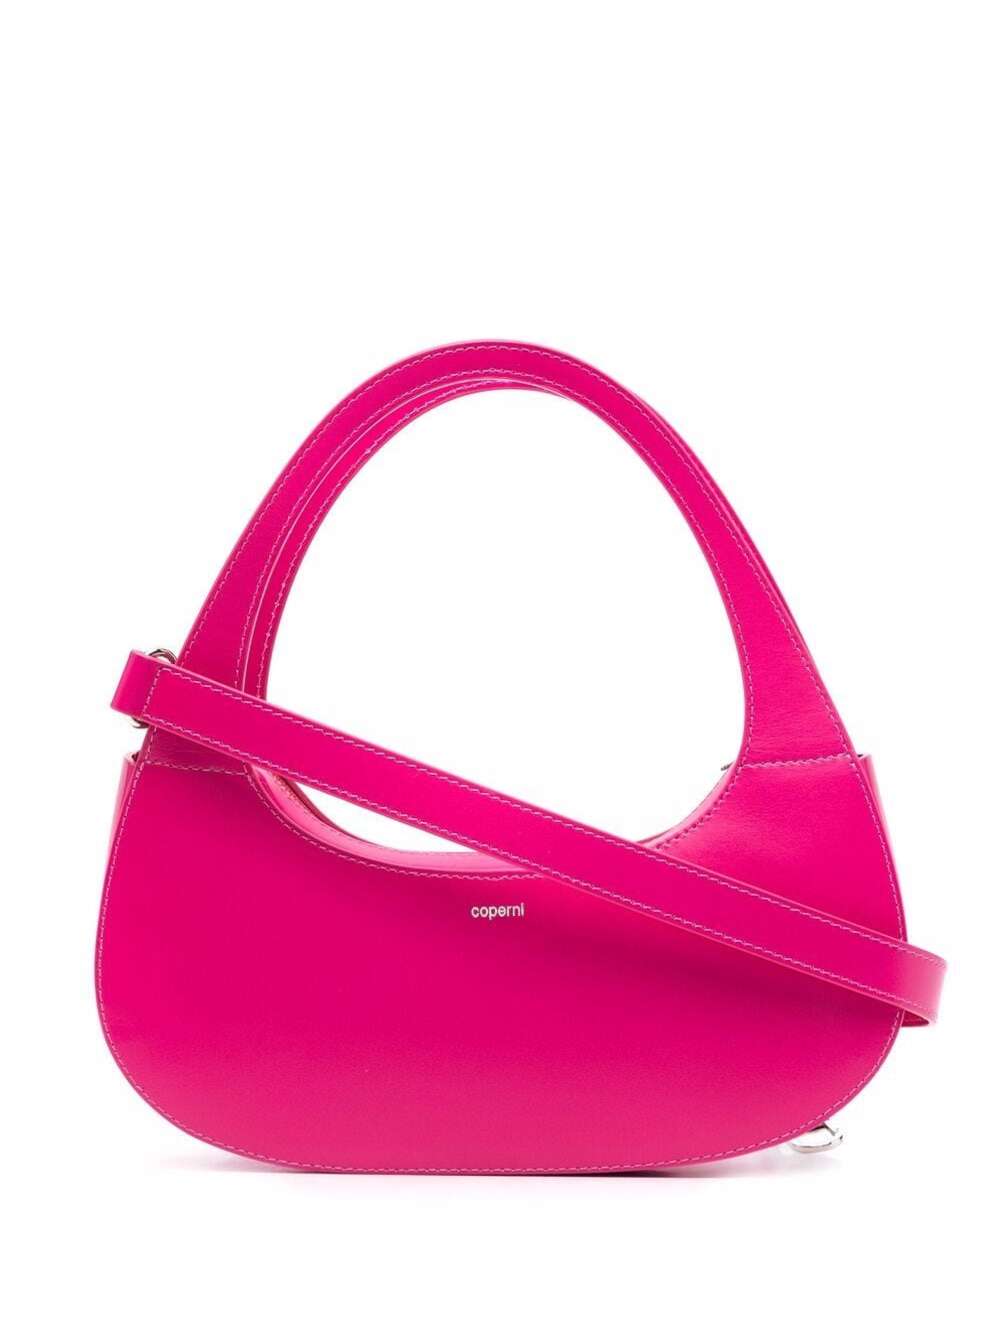 Coperni Swipe Pink Leather Handbag With Logo